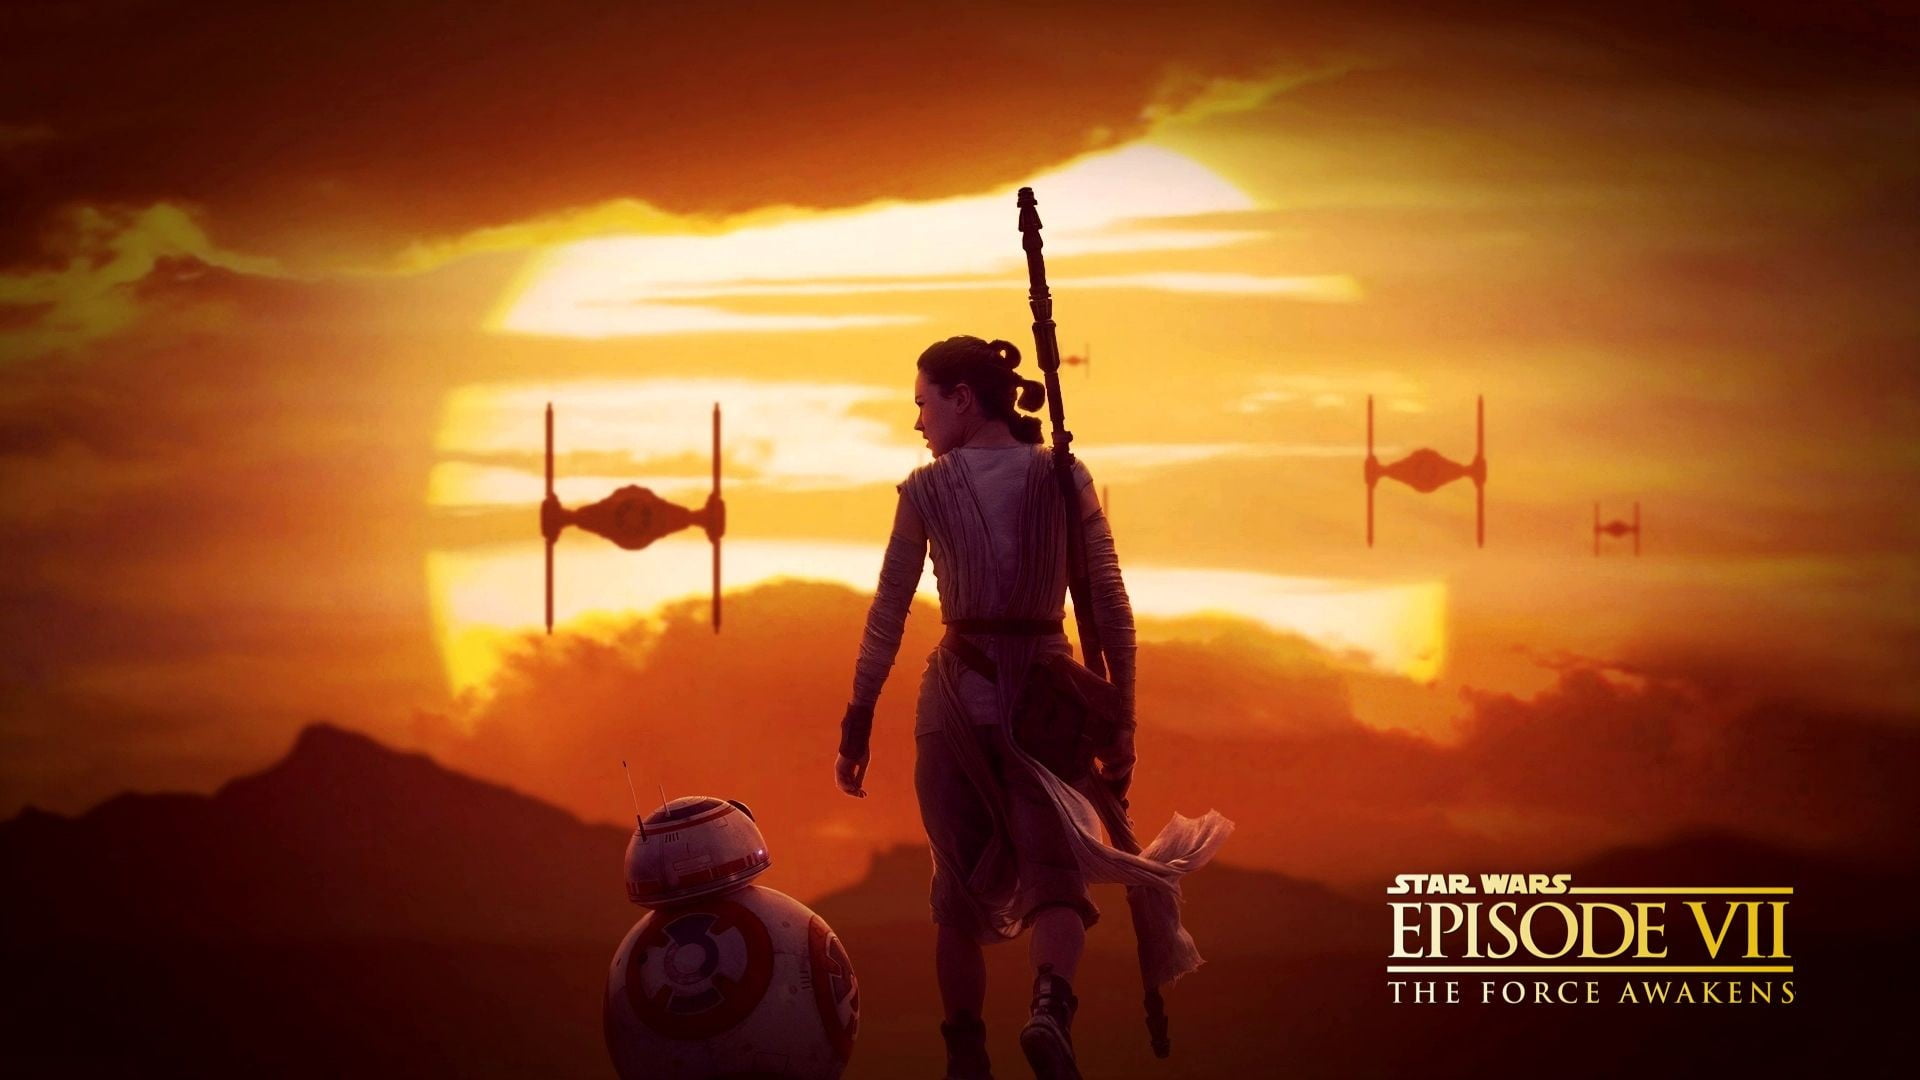 Star Wars Episode VII The Force Awakens wallpaper